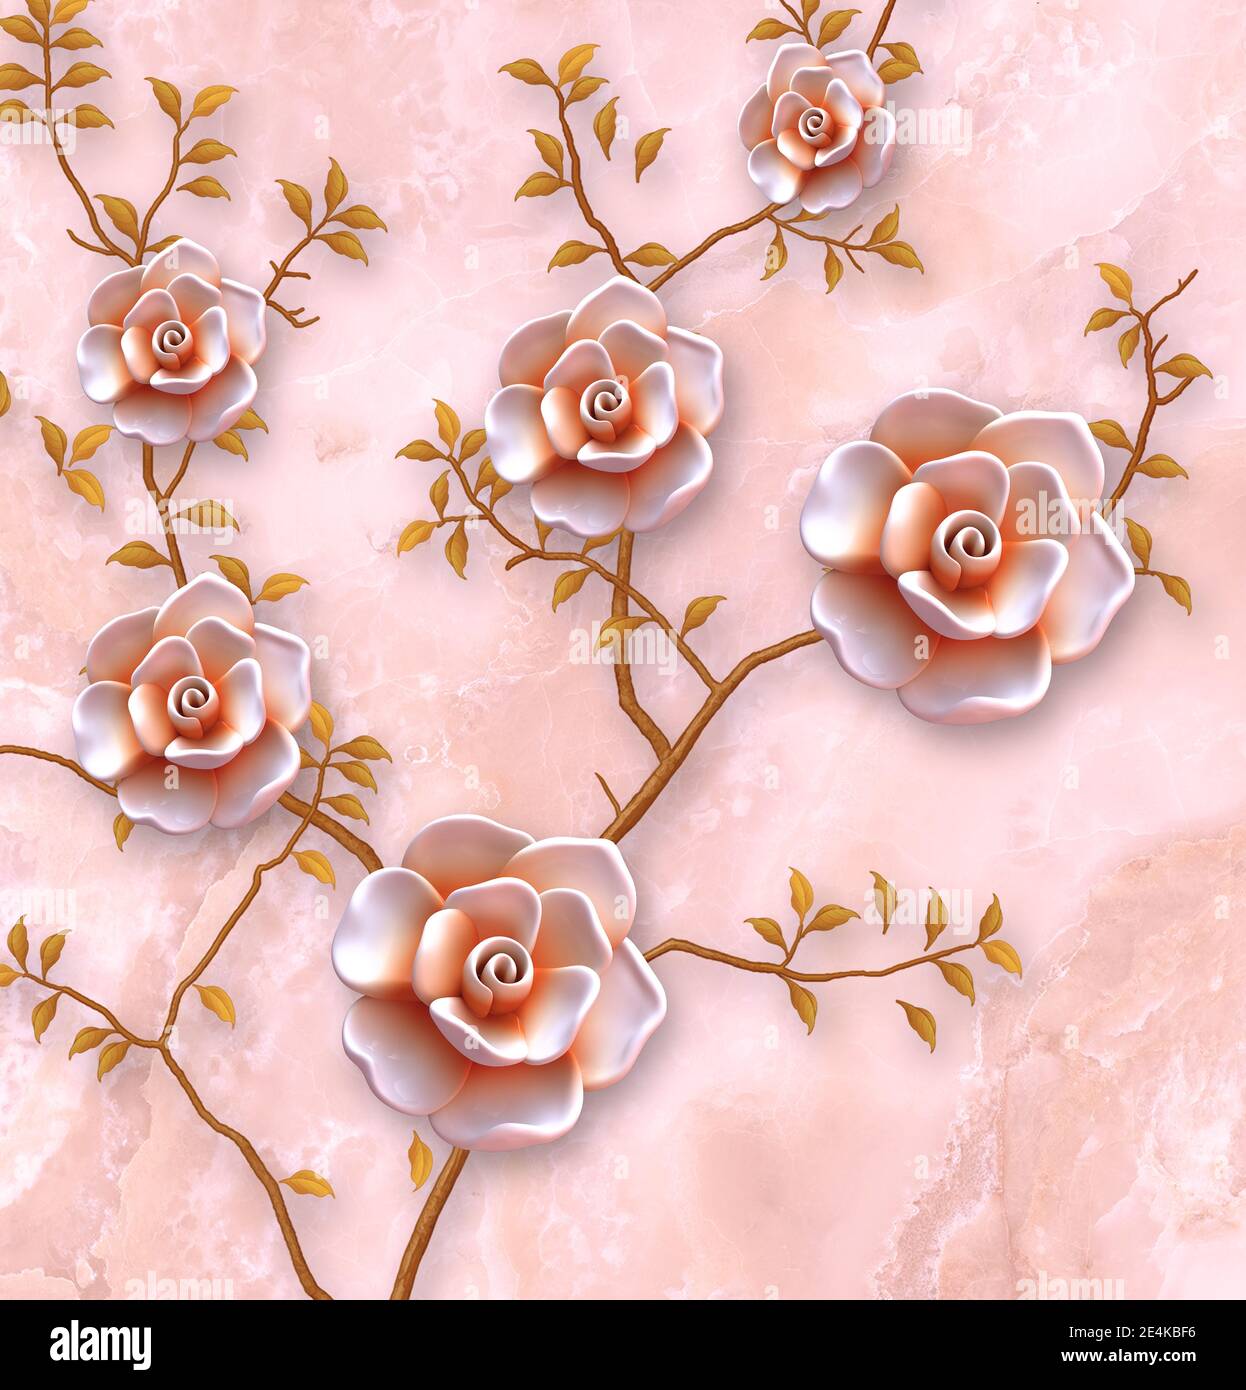 3d flowers wallpaper Stock Photo - Alamy